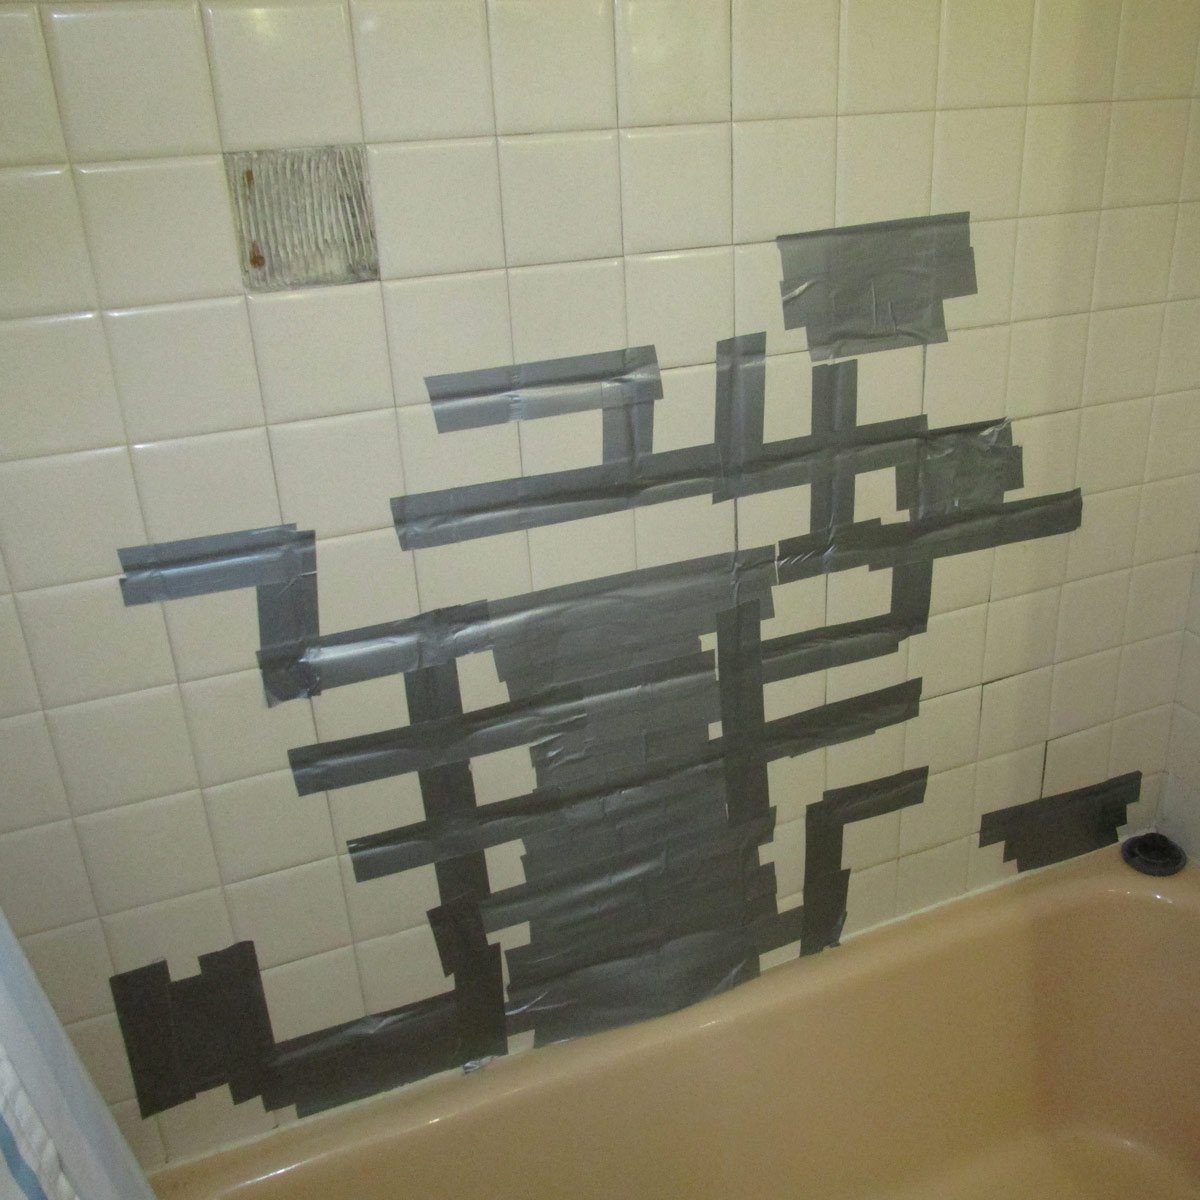 Duct-tape-wall bathroom